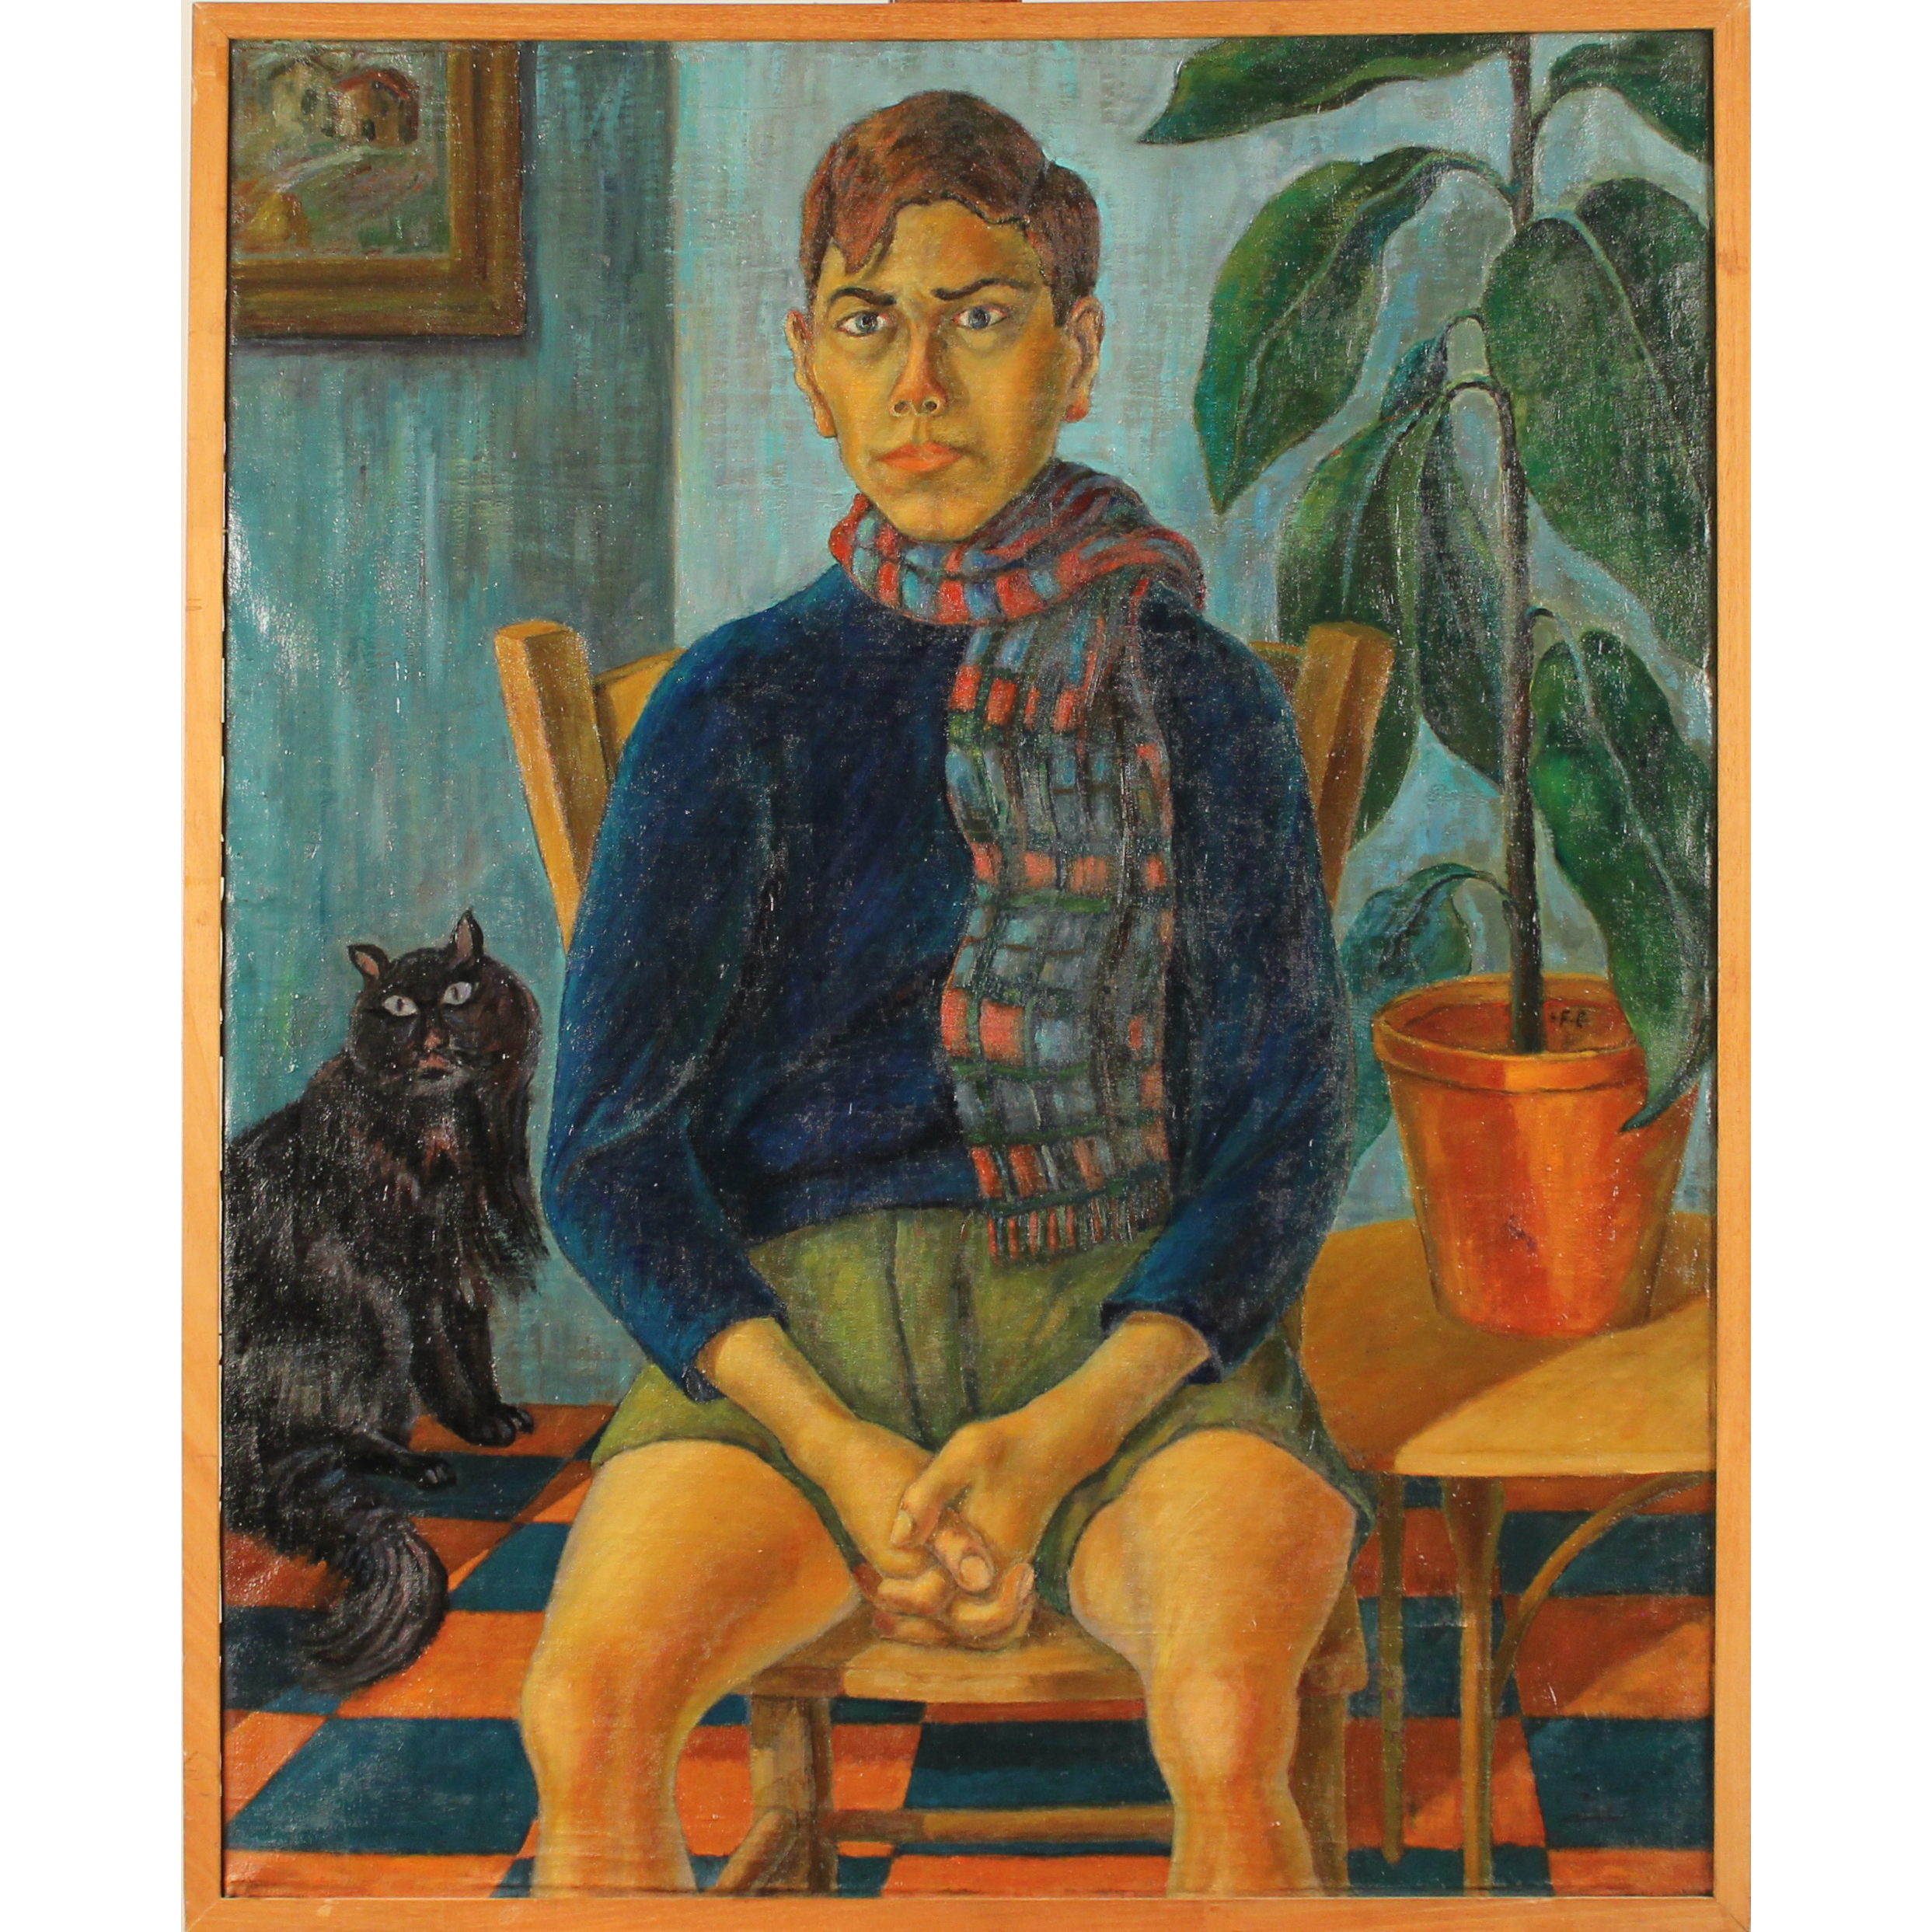 Ritratto di giovane in interno - Portrait of a young man indoors